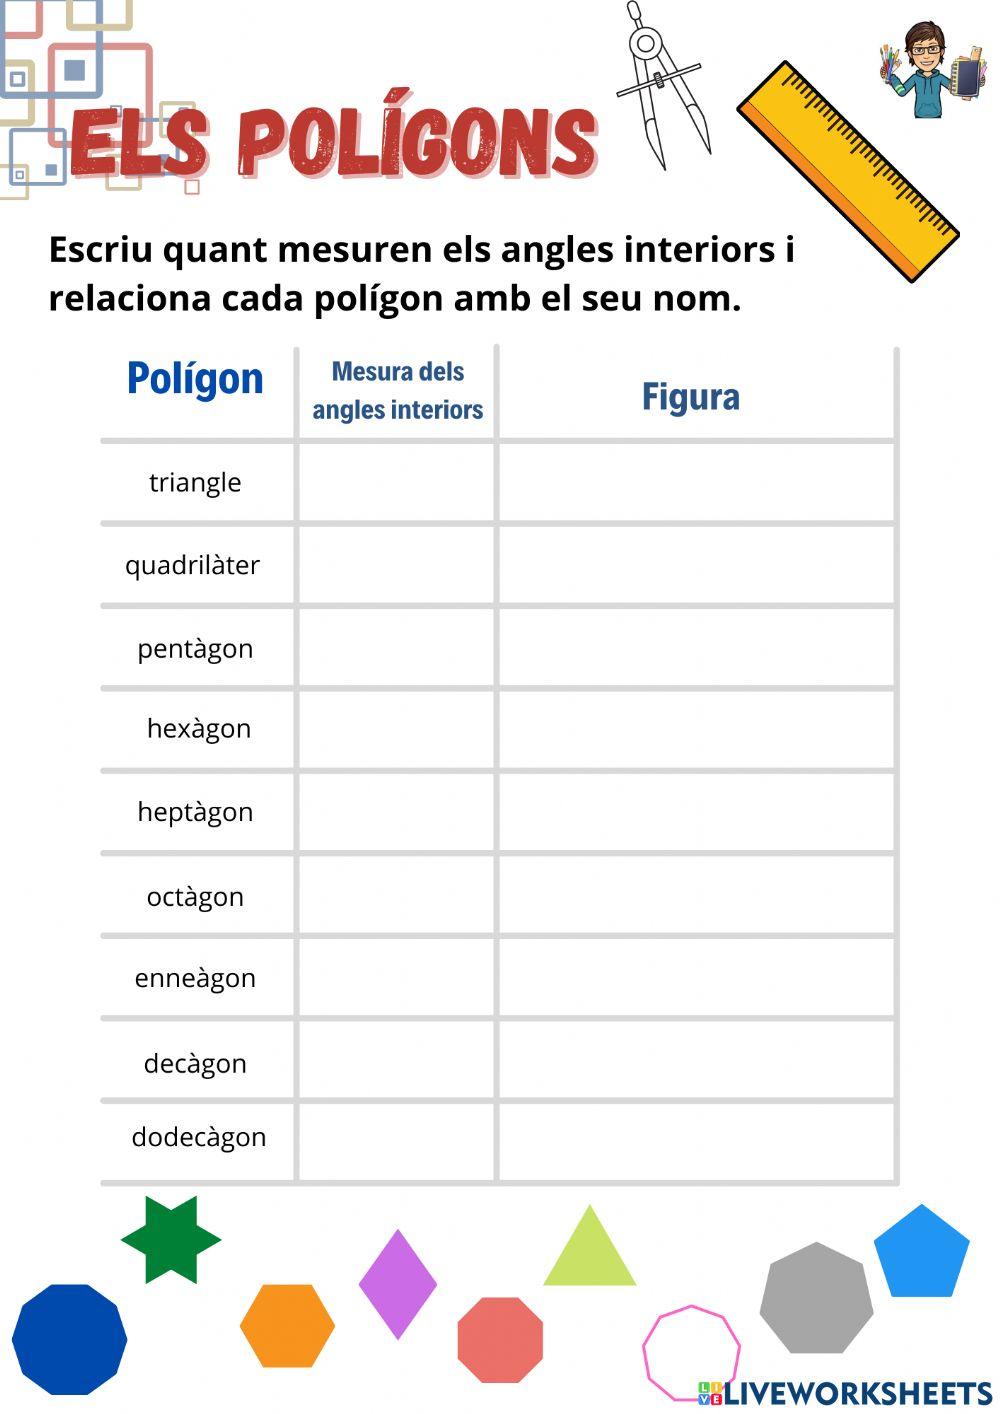 Polígons: angles interiors